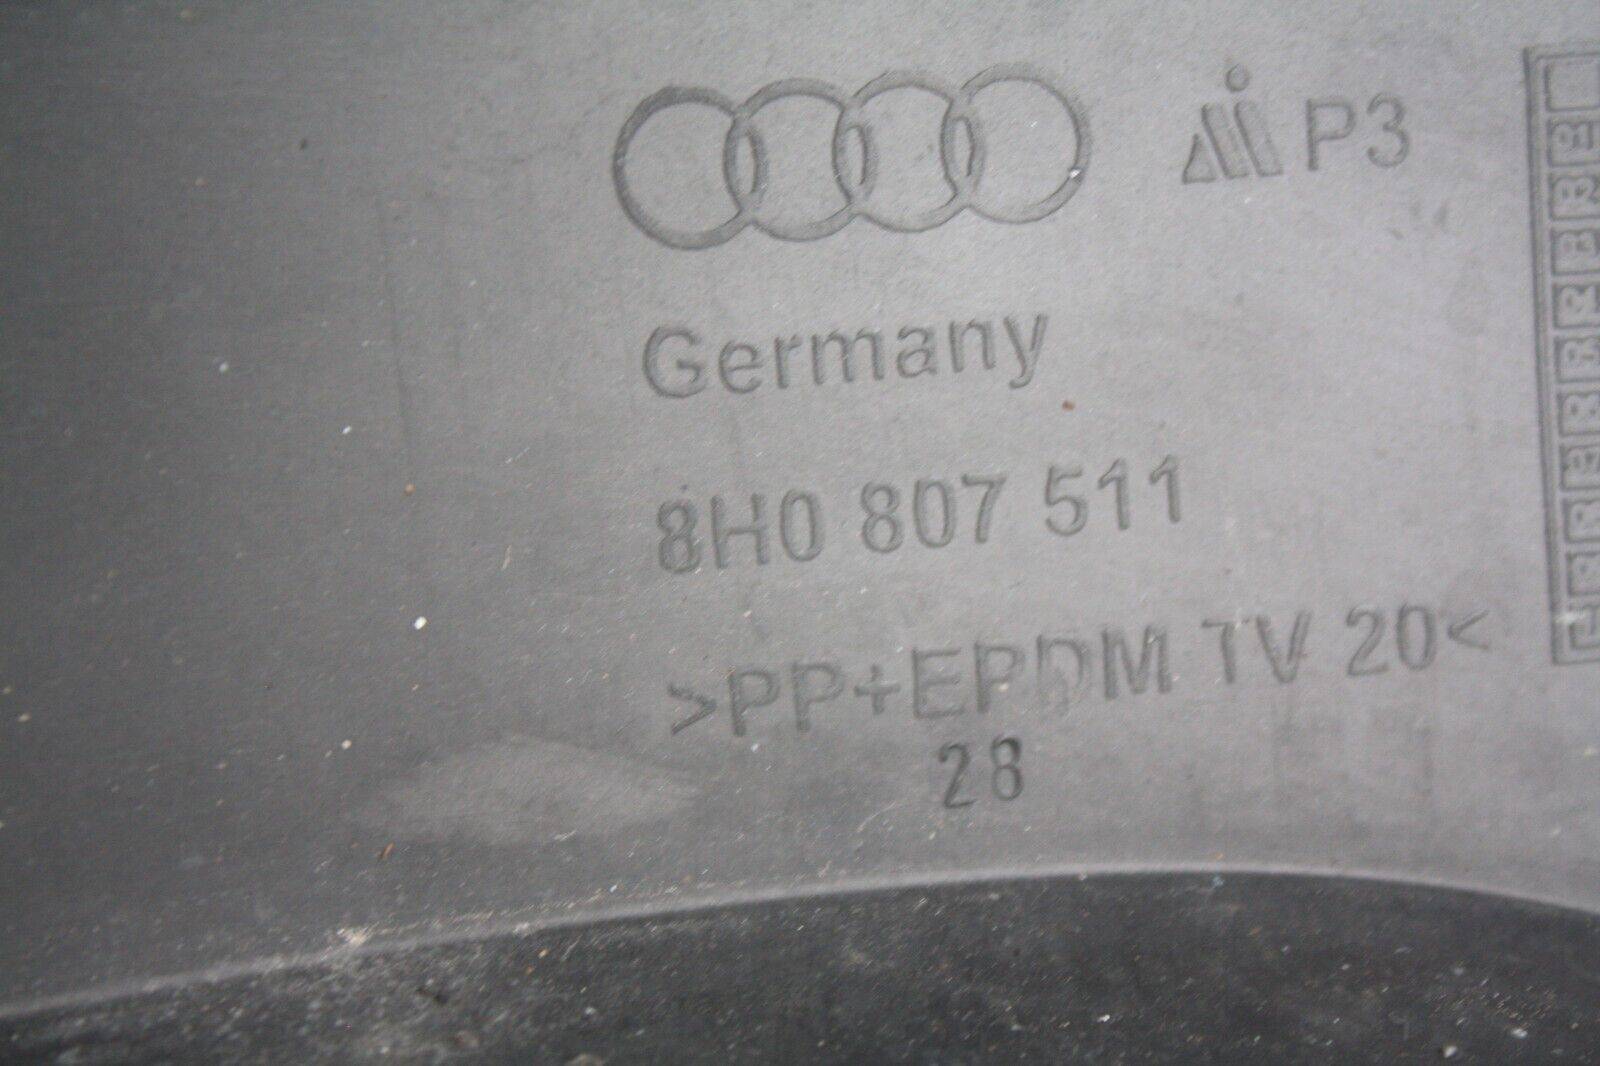 Audi-A4-Convertible-Rear-Bumper-2005-TO-2008-8H0807511-Genuine-175782029546-12